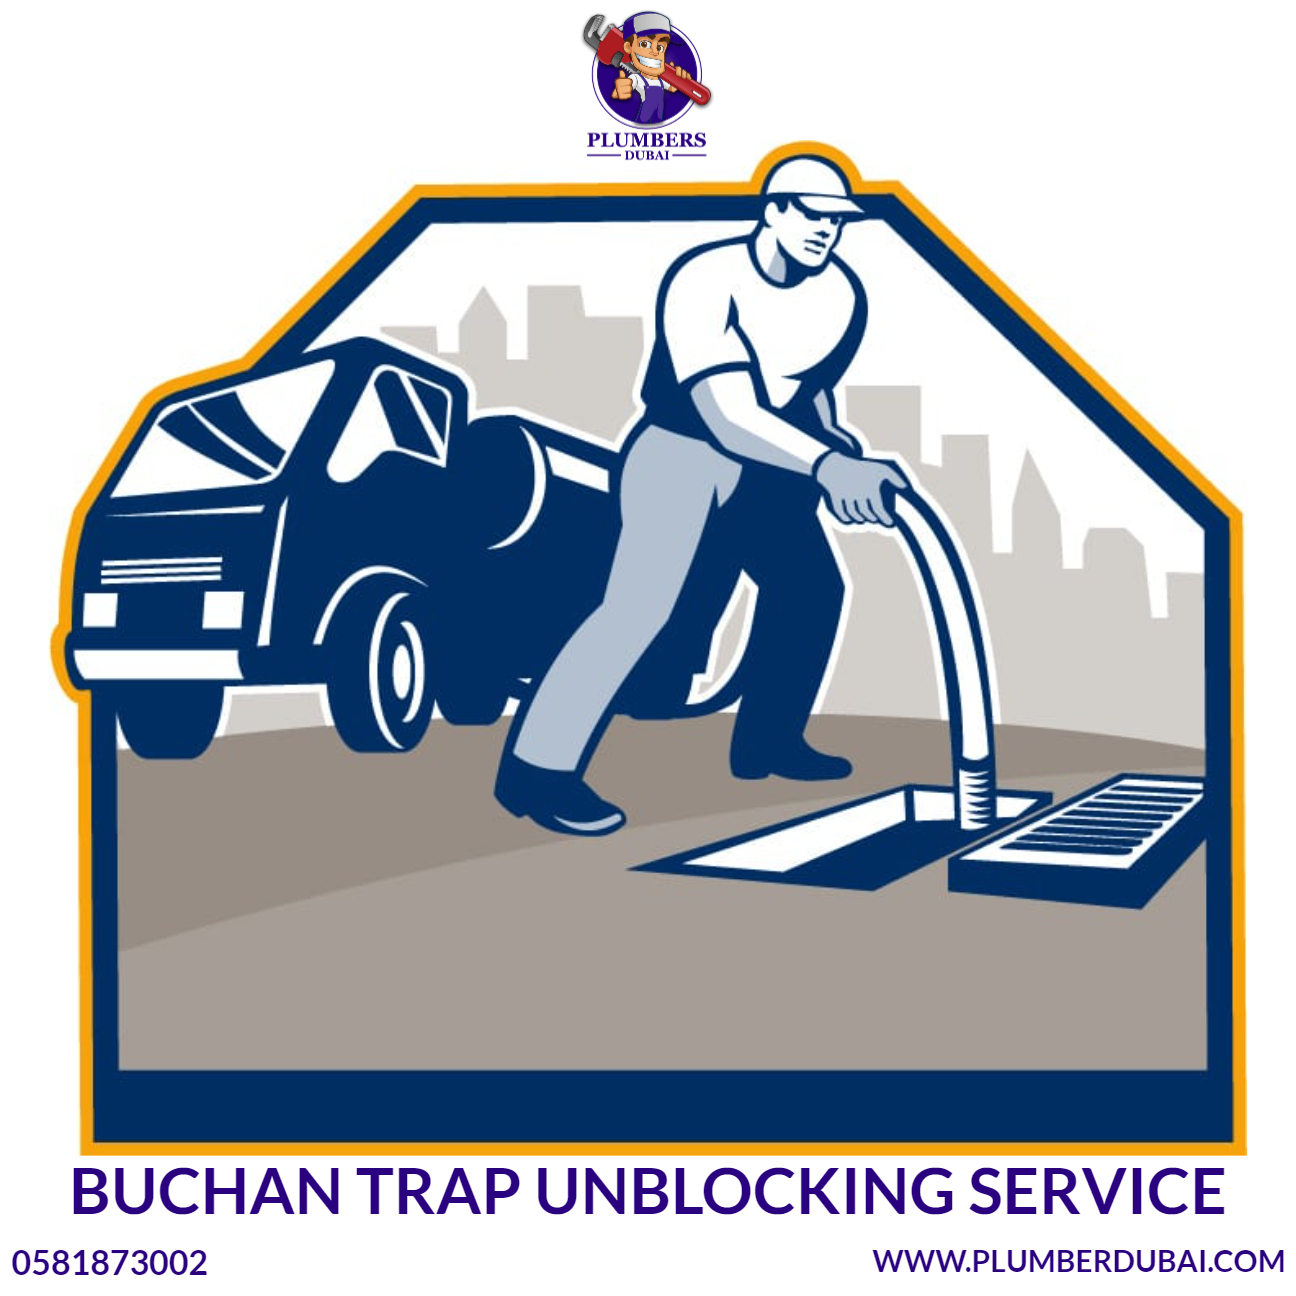 Buchan Trap Unblocking Service